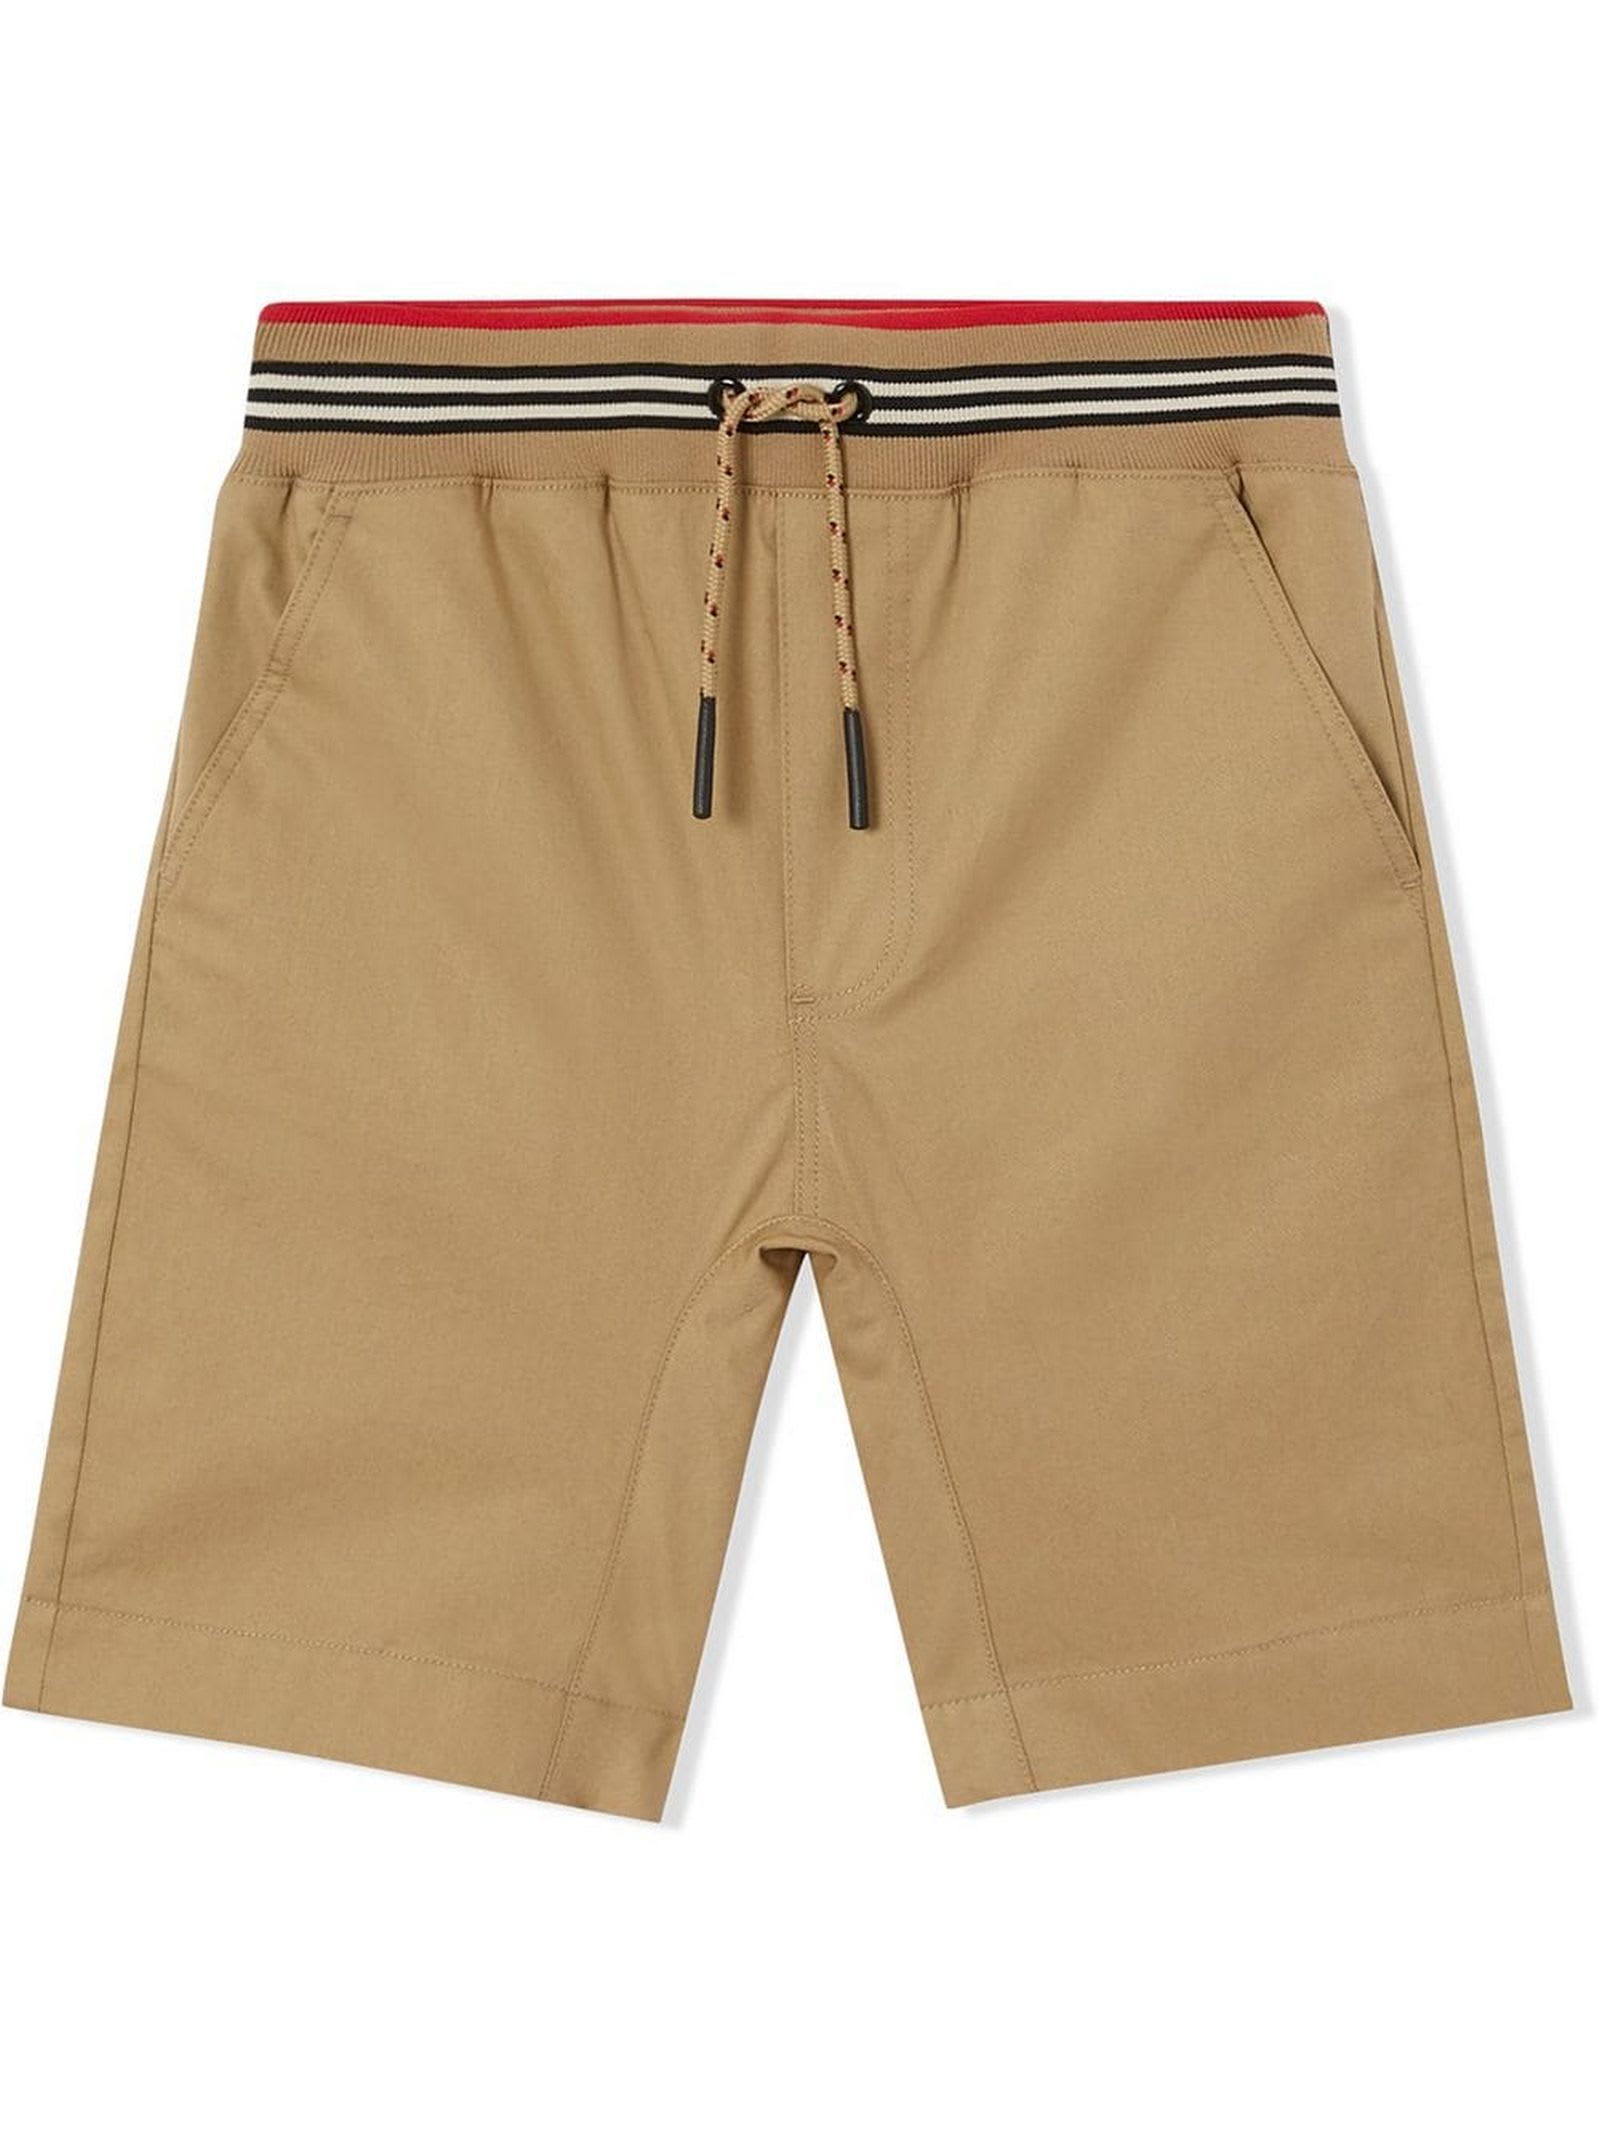 Burberry Honey Brown Cotton Twill Shorts